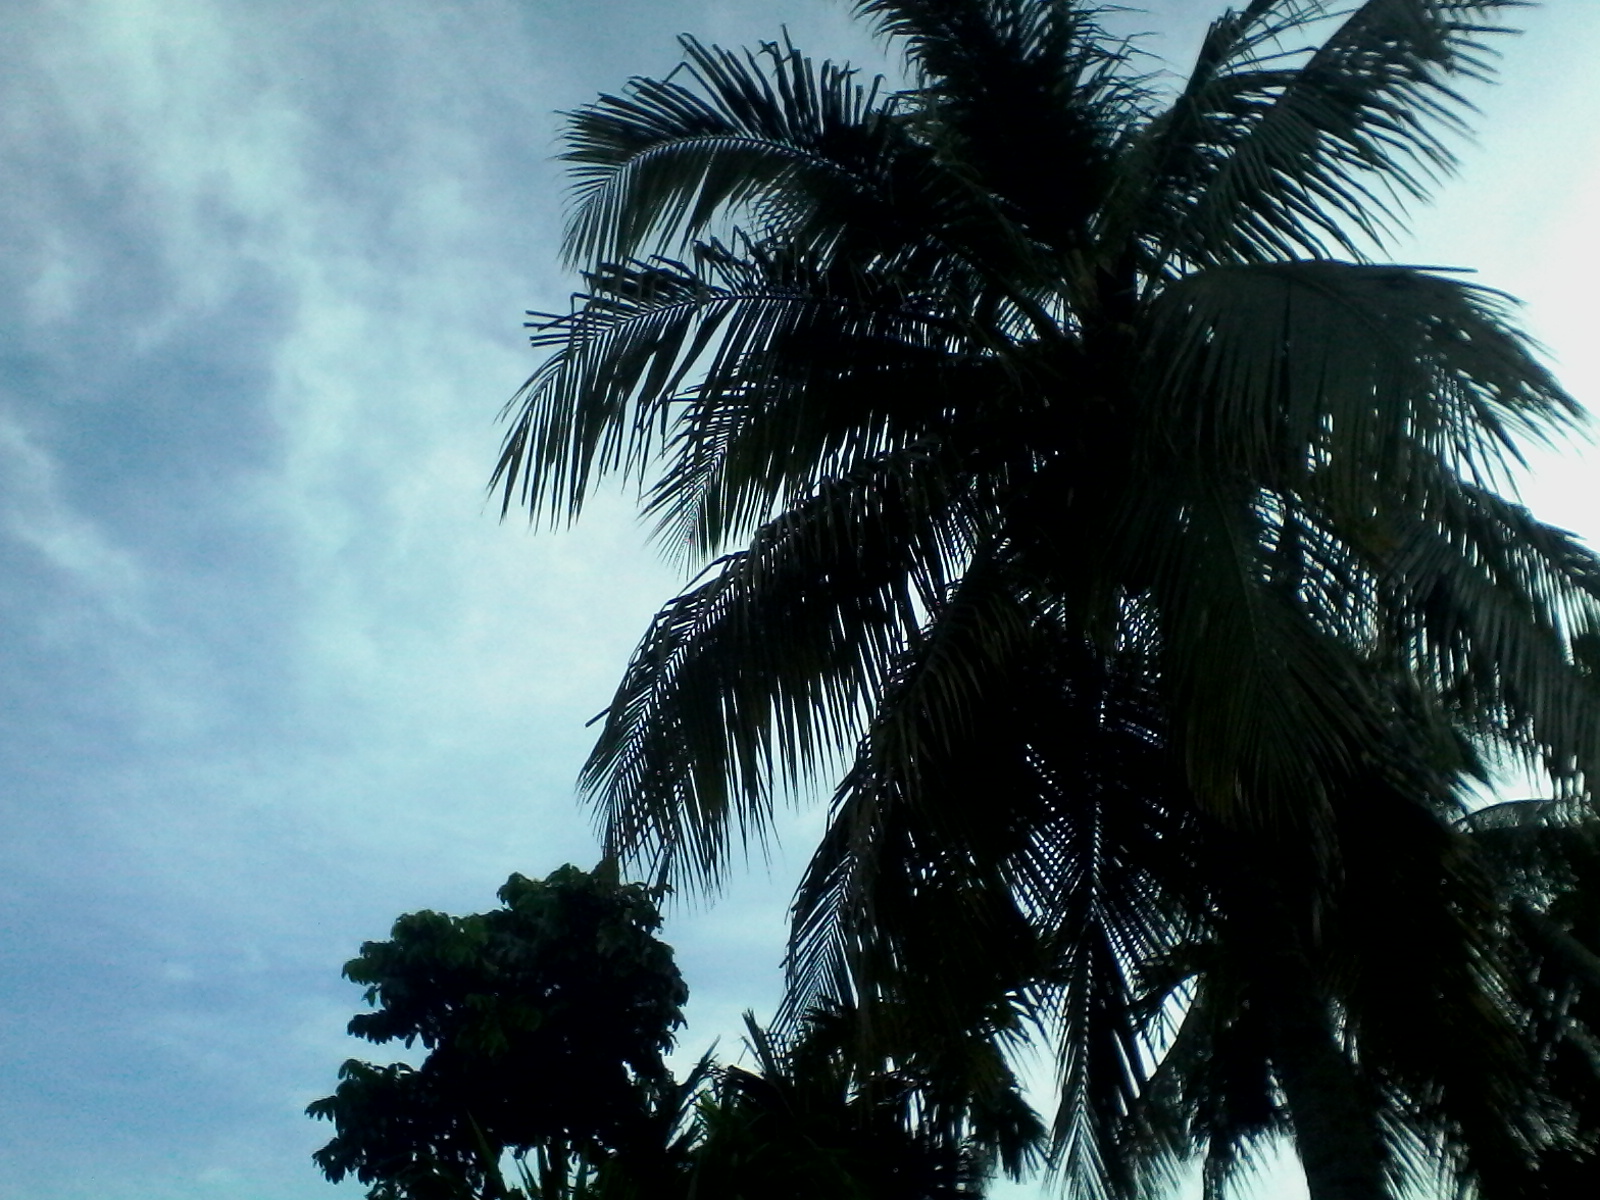 File:Coconut tree one.jpg - Wikimedia Commons